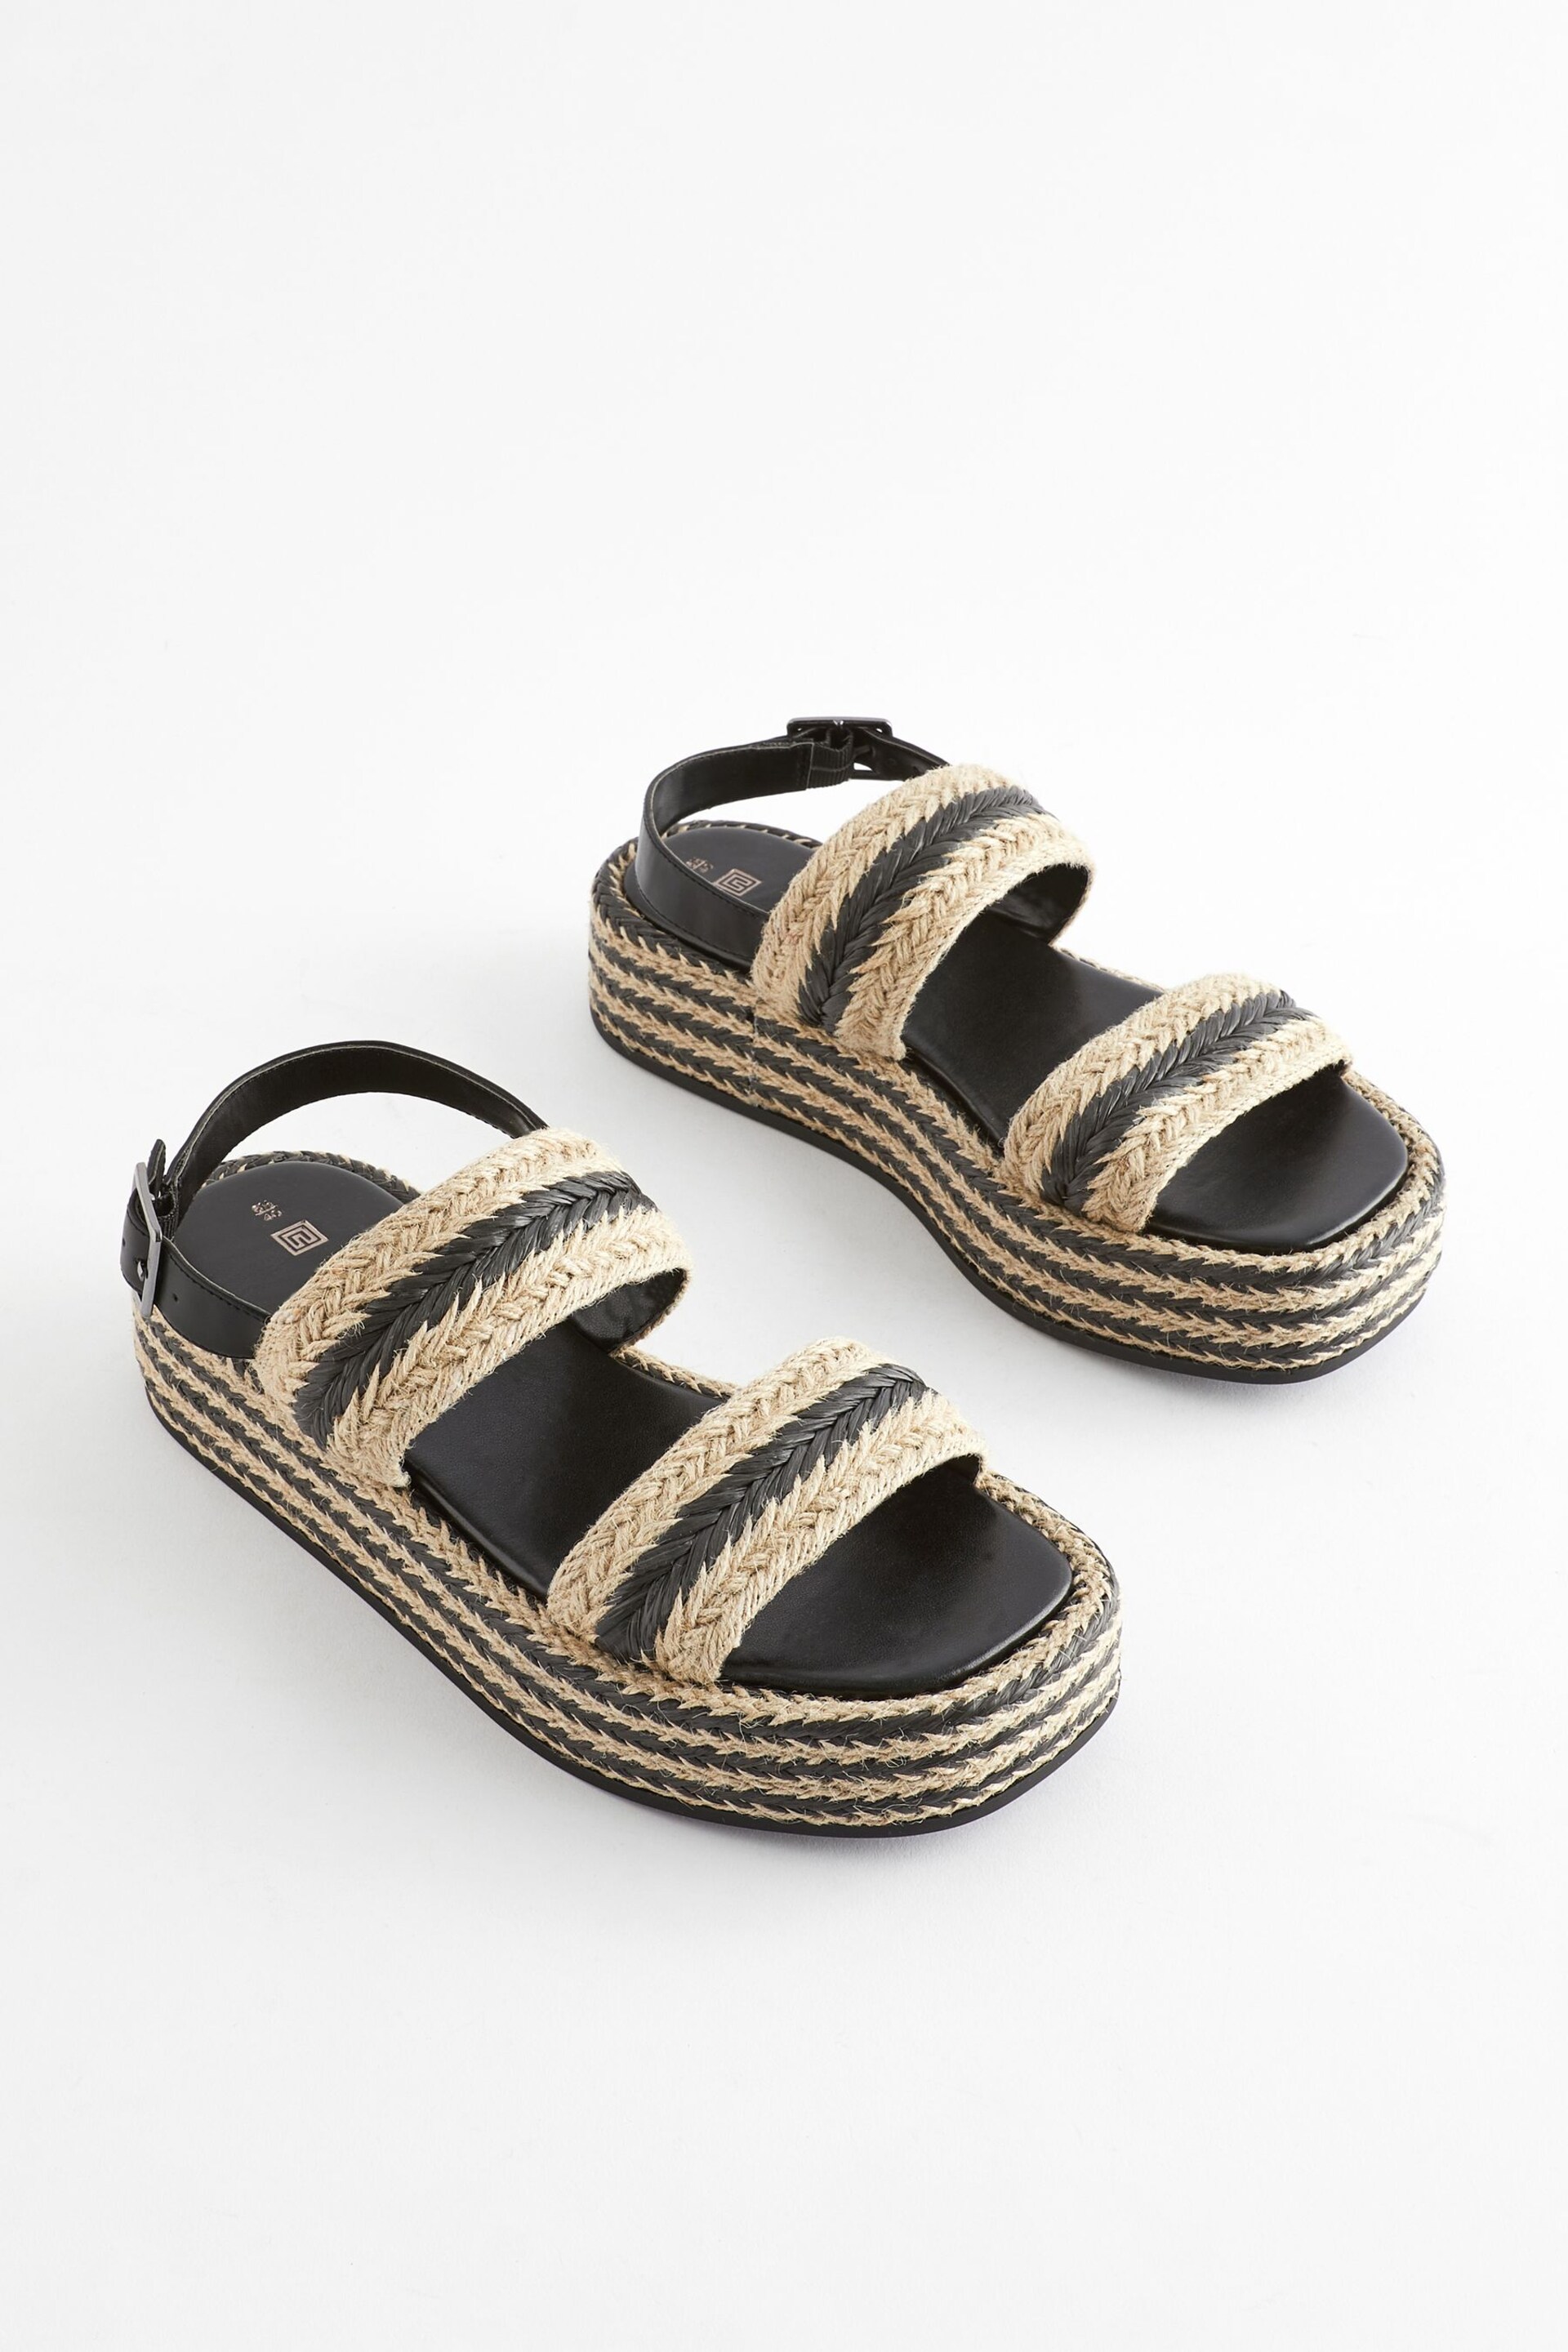 Monochrome Espadrille Flatform Sandals - Image 2 of 6